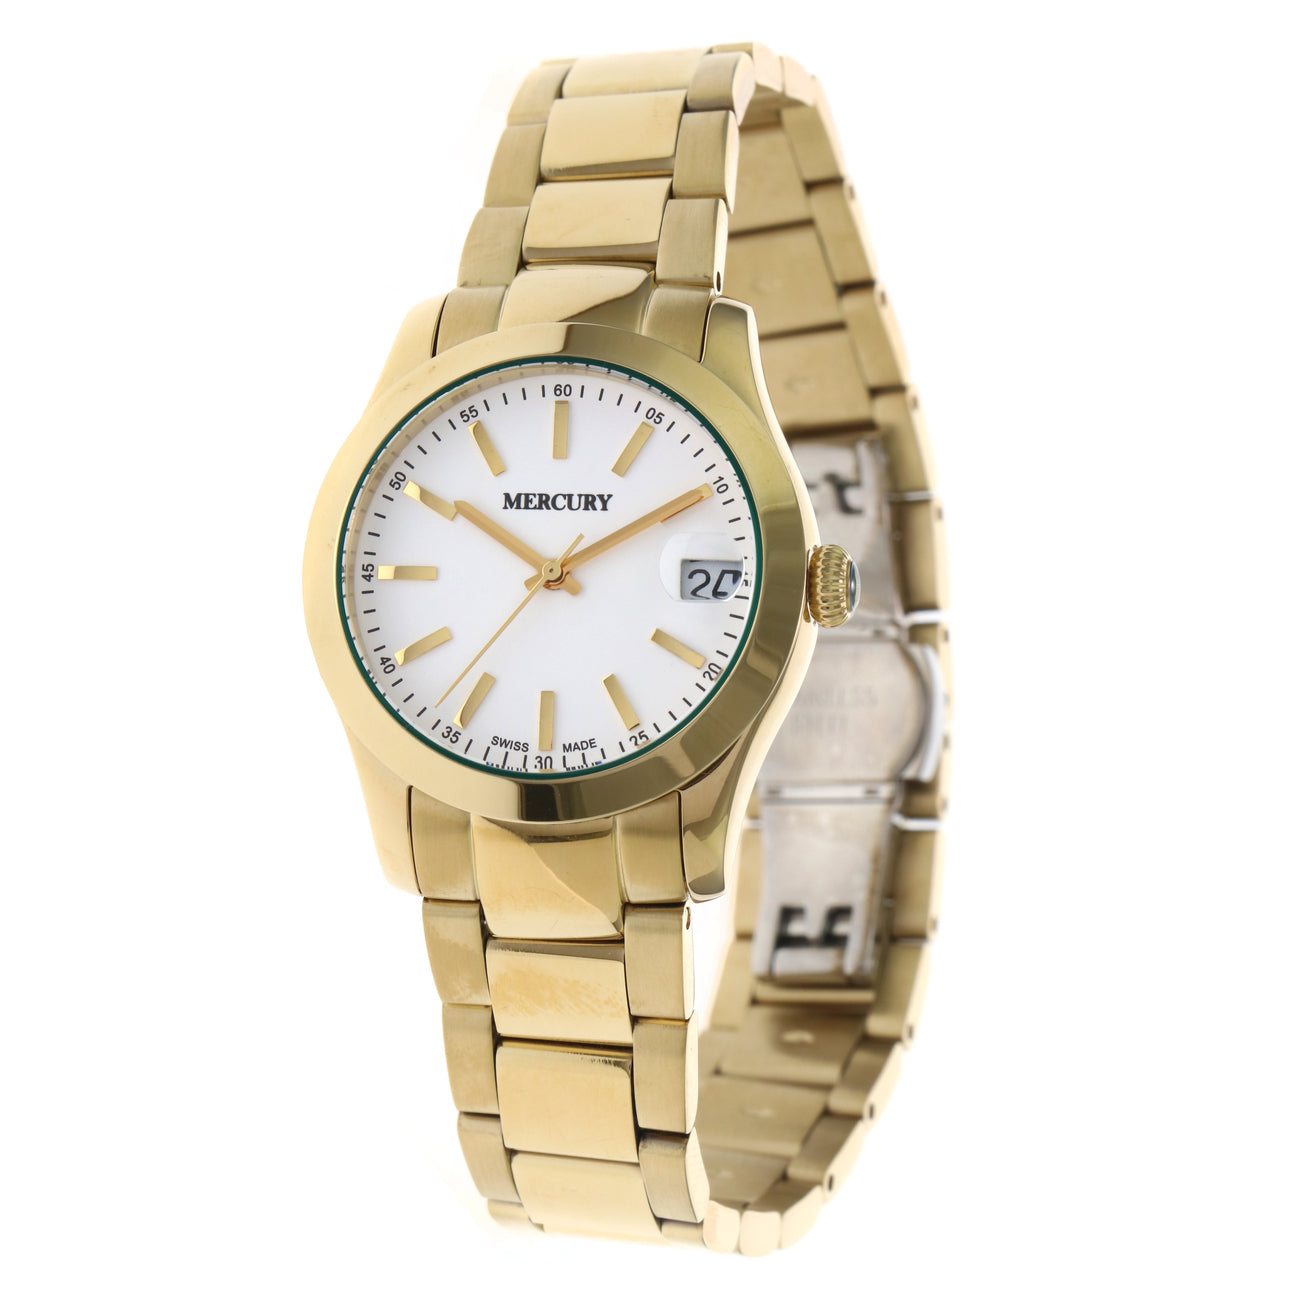 Mercury Women's Swiss Quartz Watch with White Dial - MER-0028